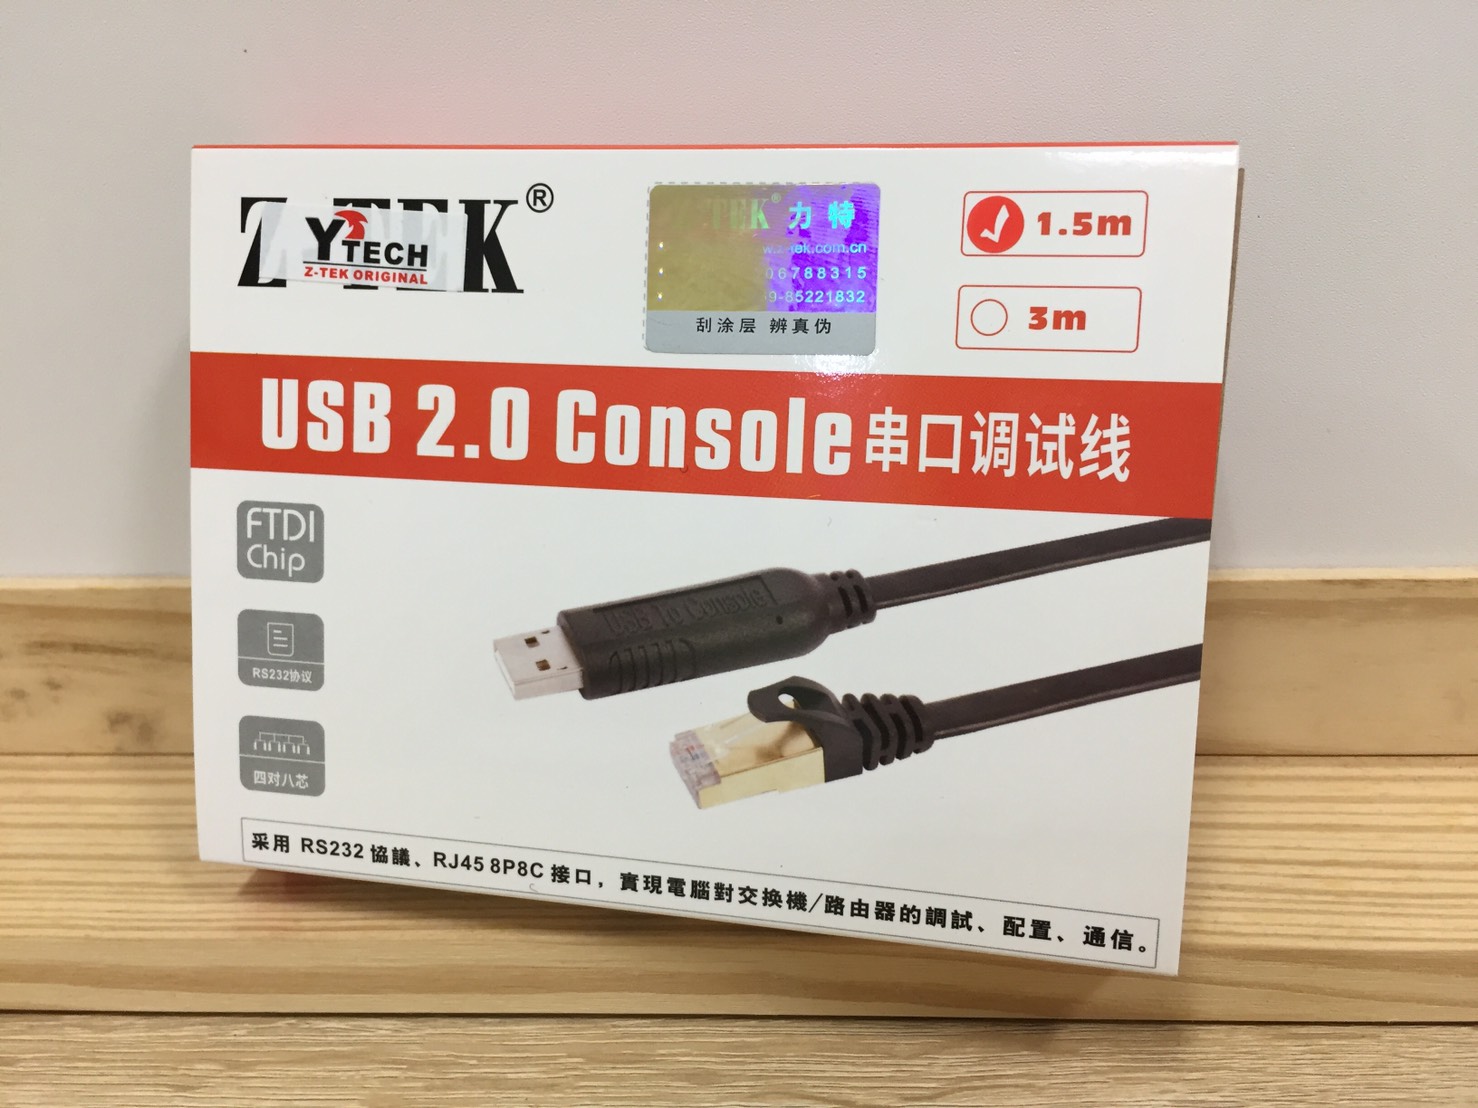 USB2.0 Console 1.5m